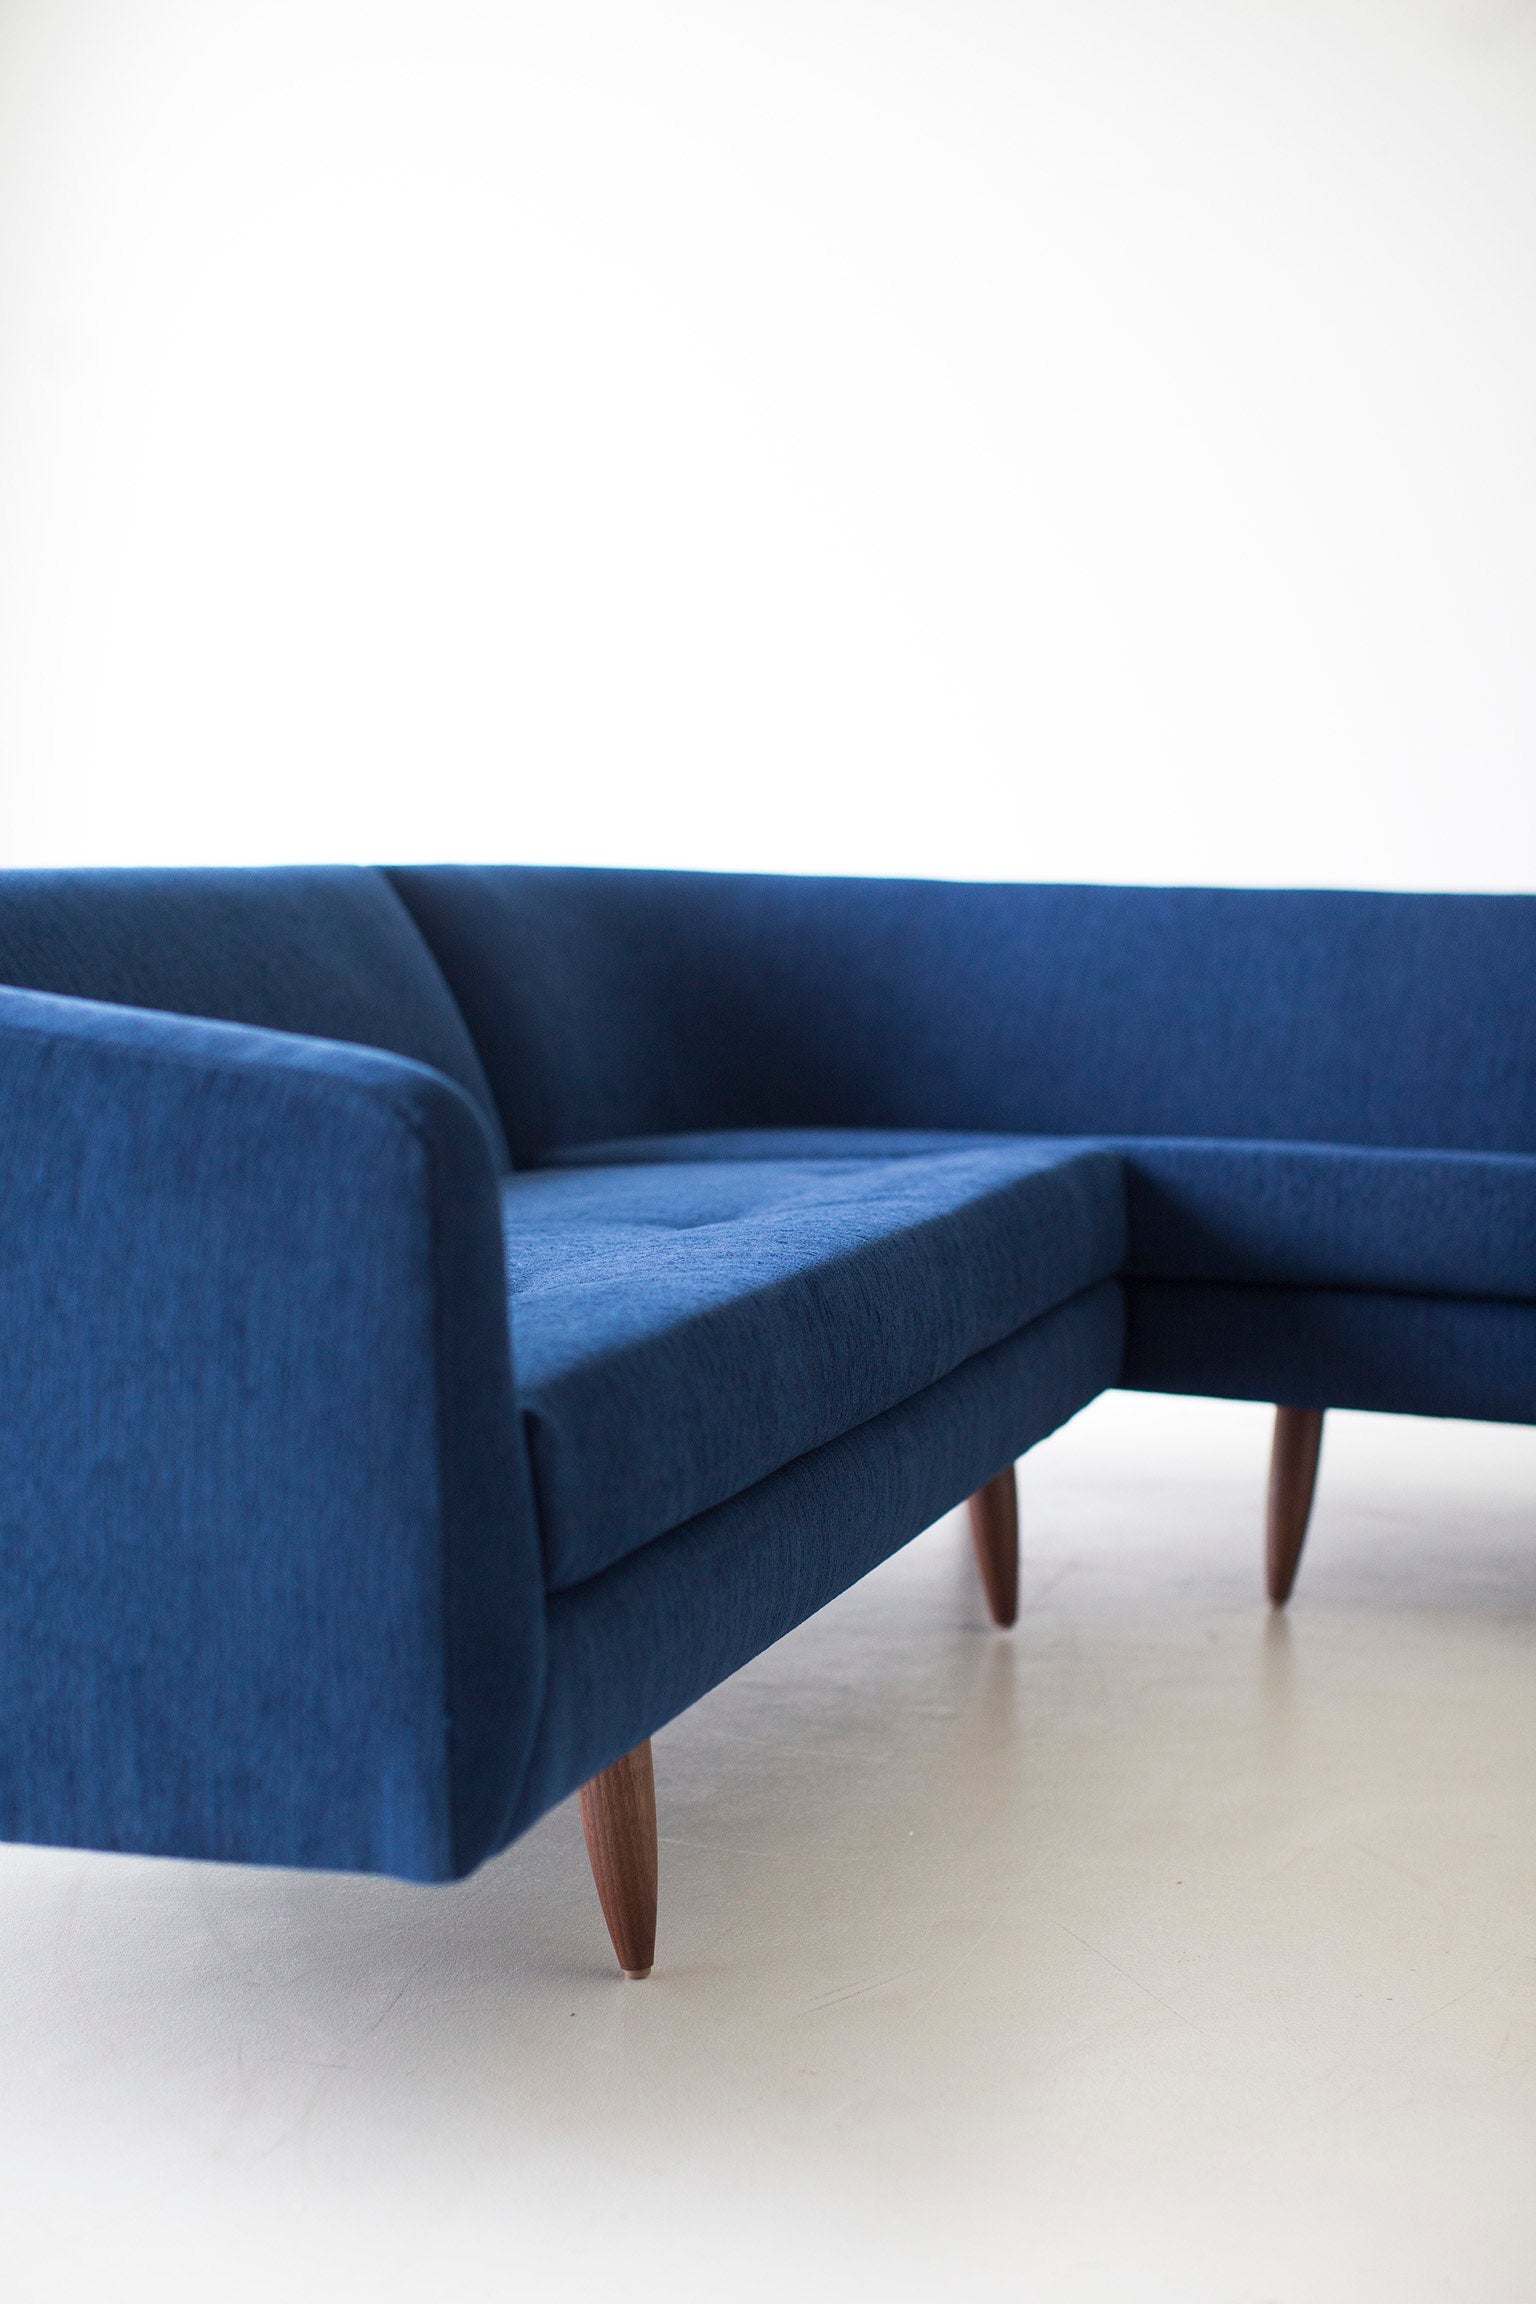 modern-sectional-sofa-01